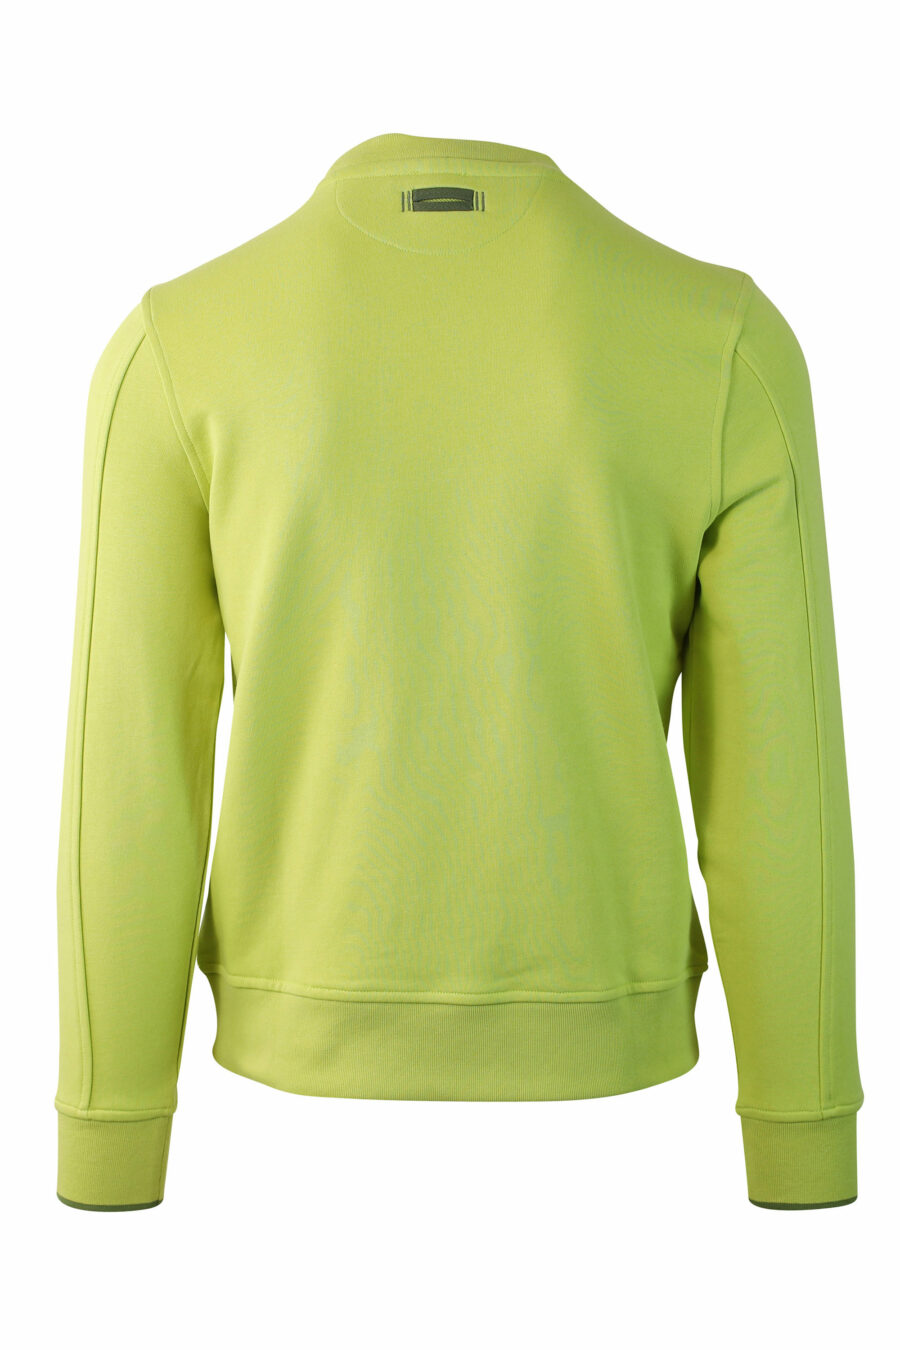 Lime green sweatshirt with monochrome velvet maxilogue - IMG 0075 1